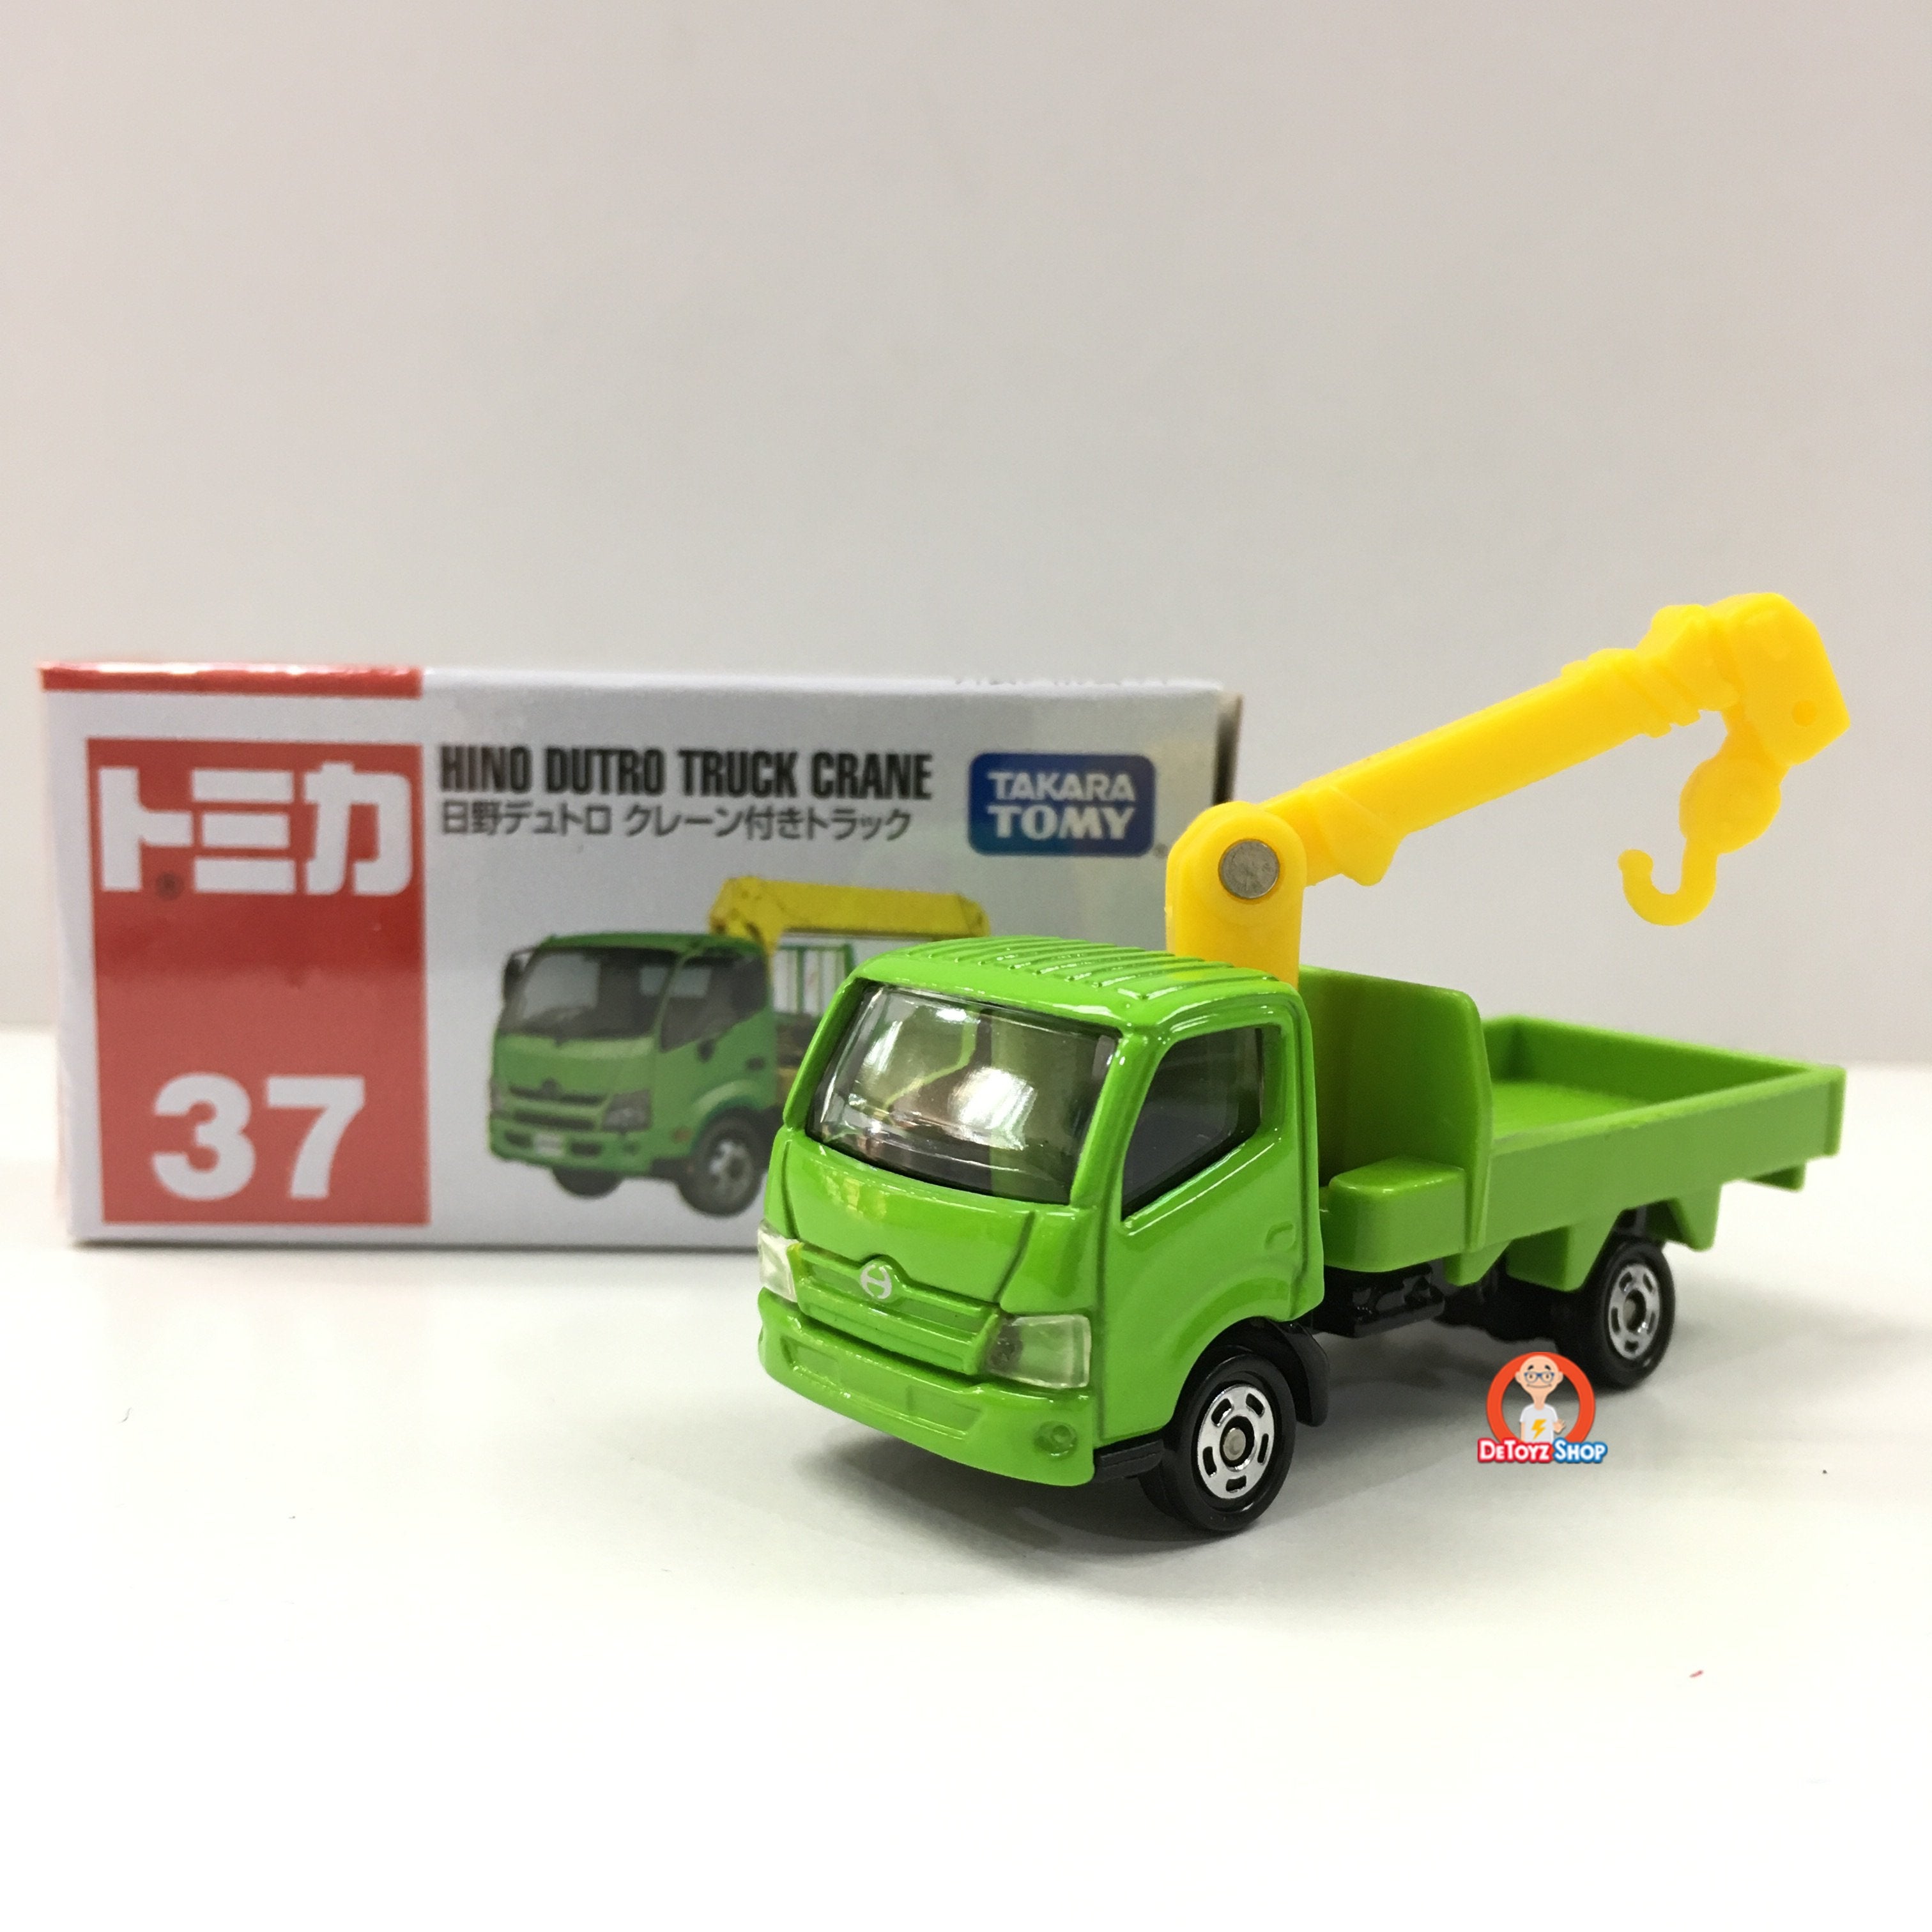 Tomica #37 Hino Dutro Truck Crane